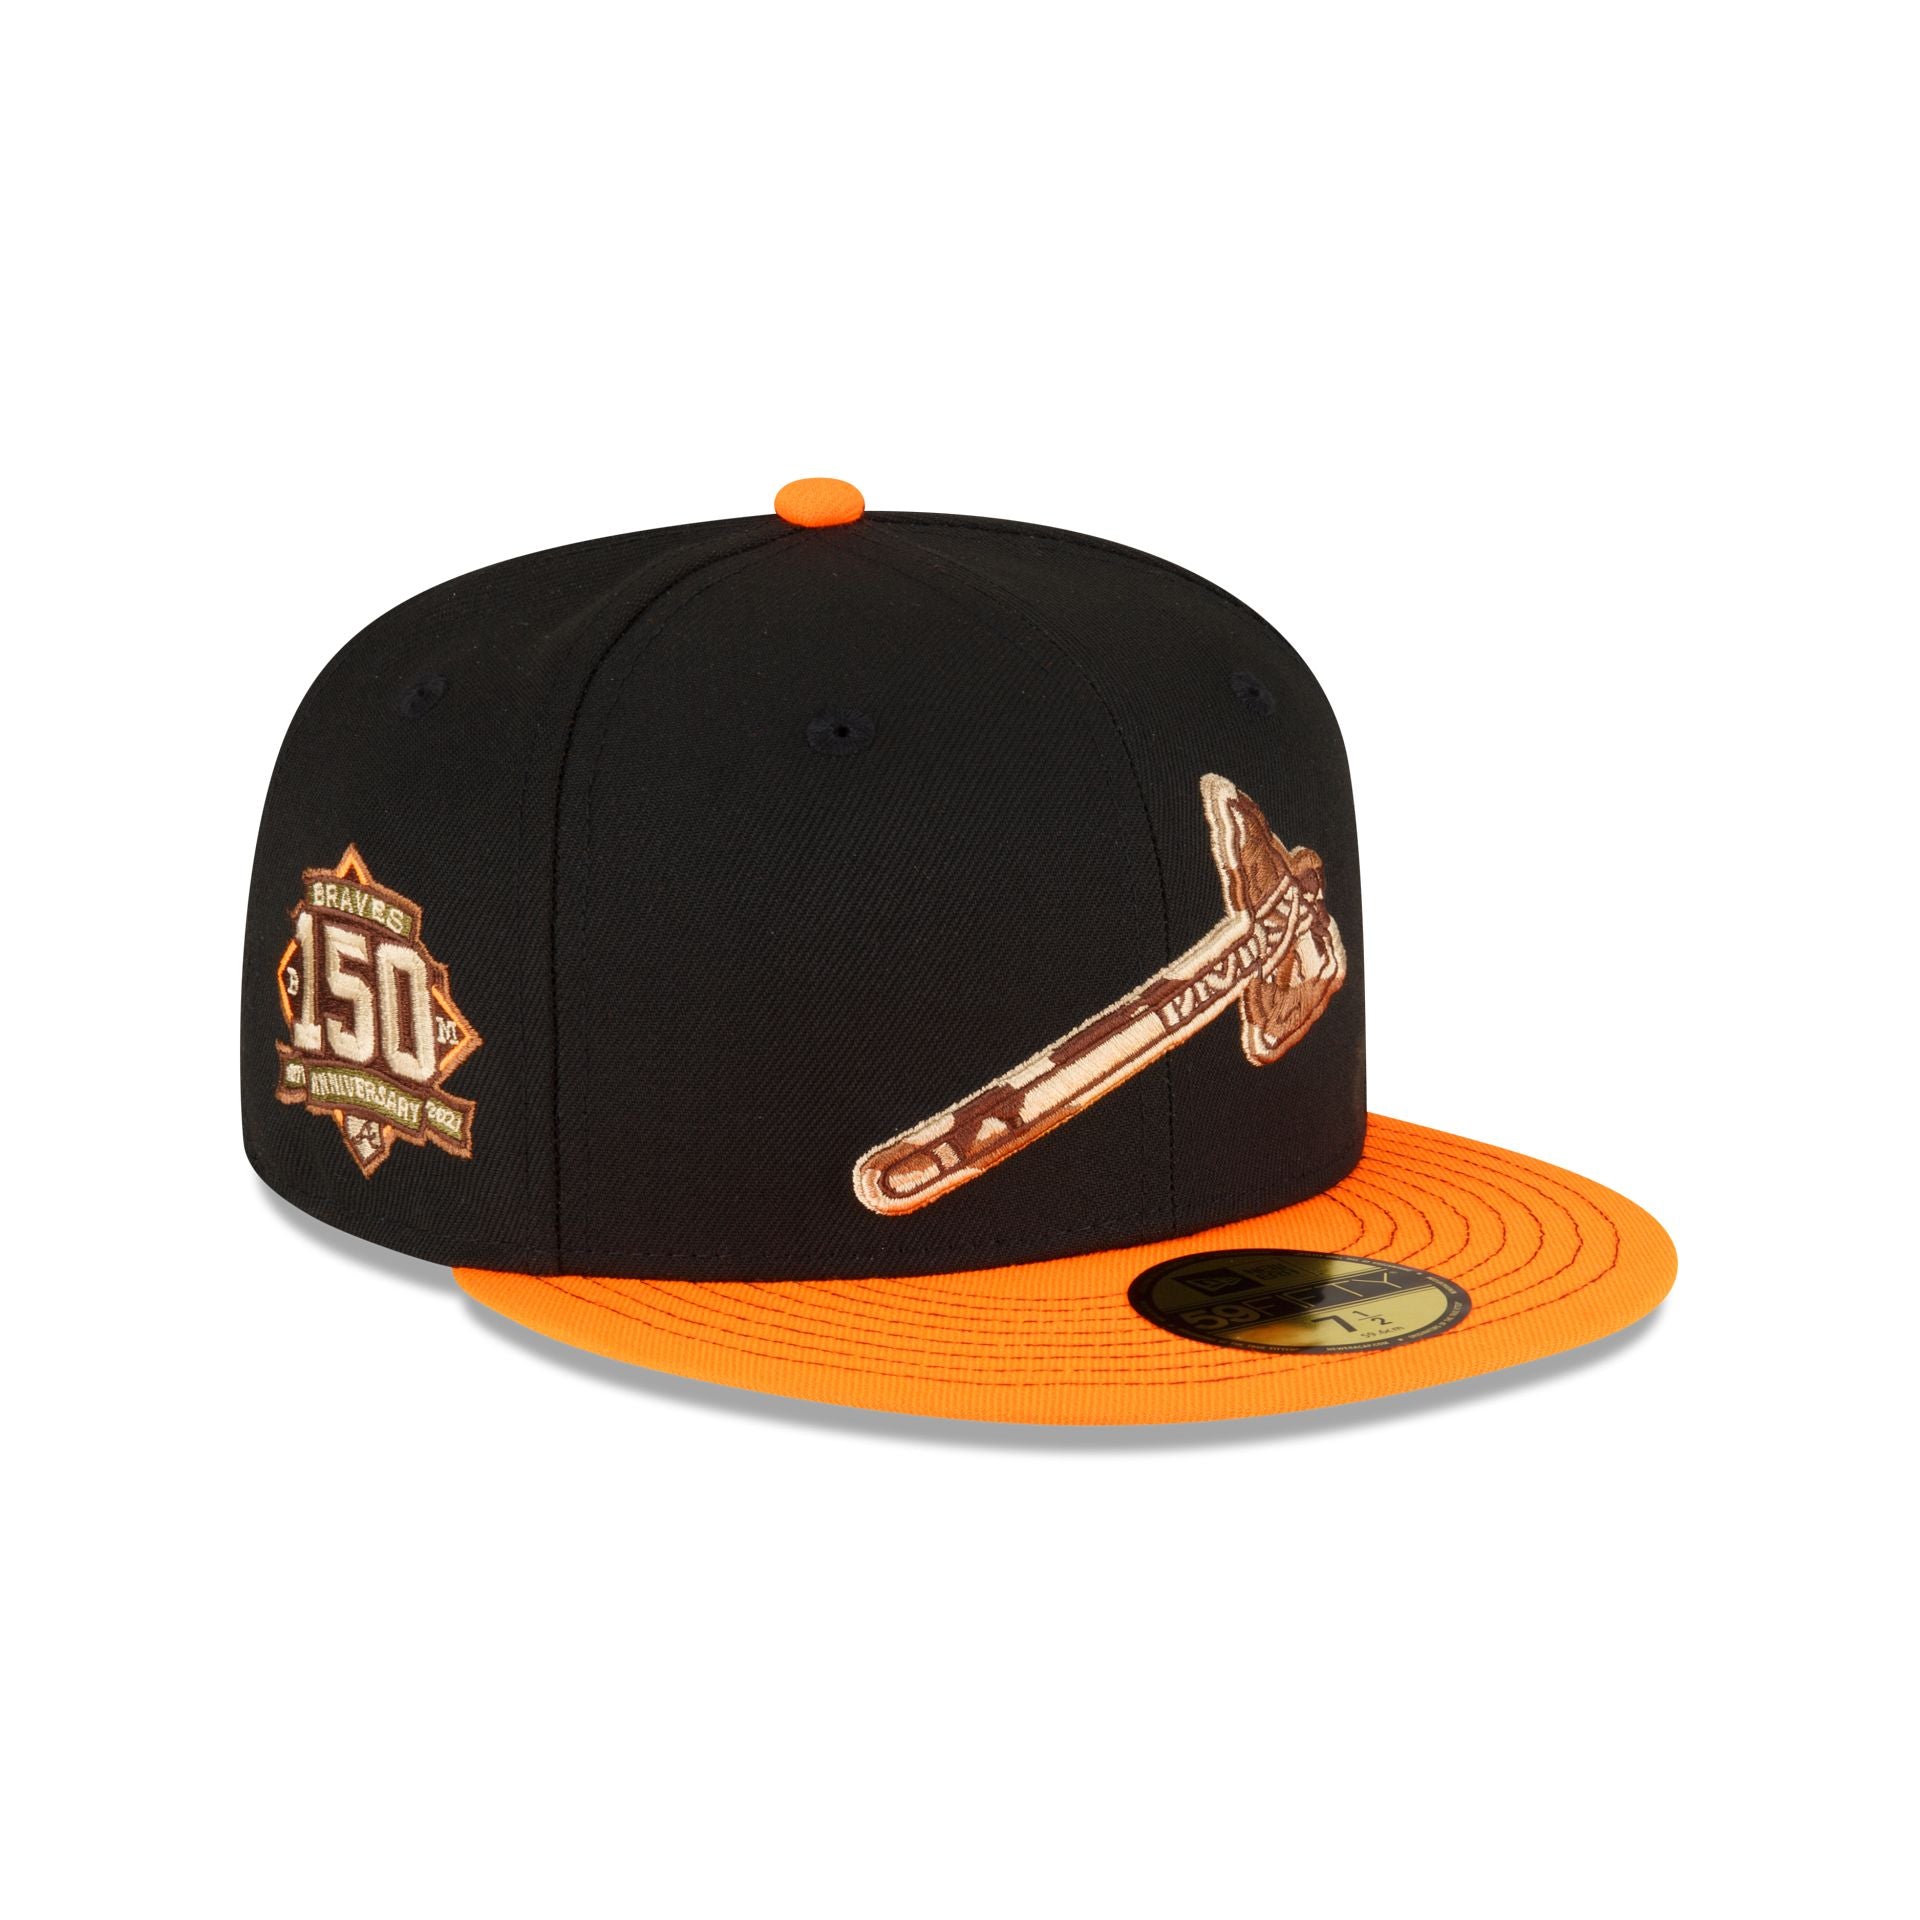 Just Caps Orange Visor Atlanta Braves 59FIFTY Fitted Hat – New Era Cap